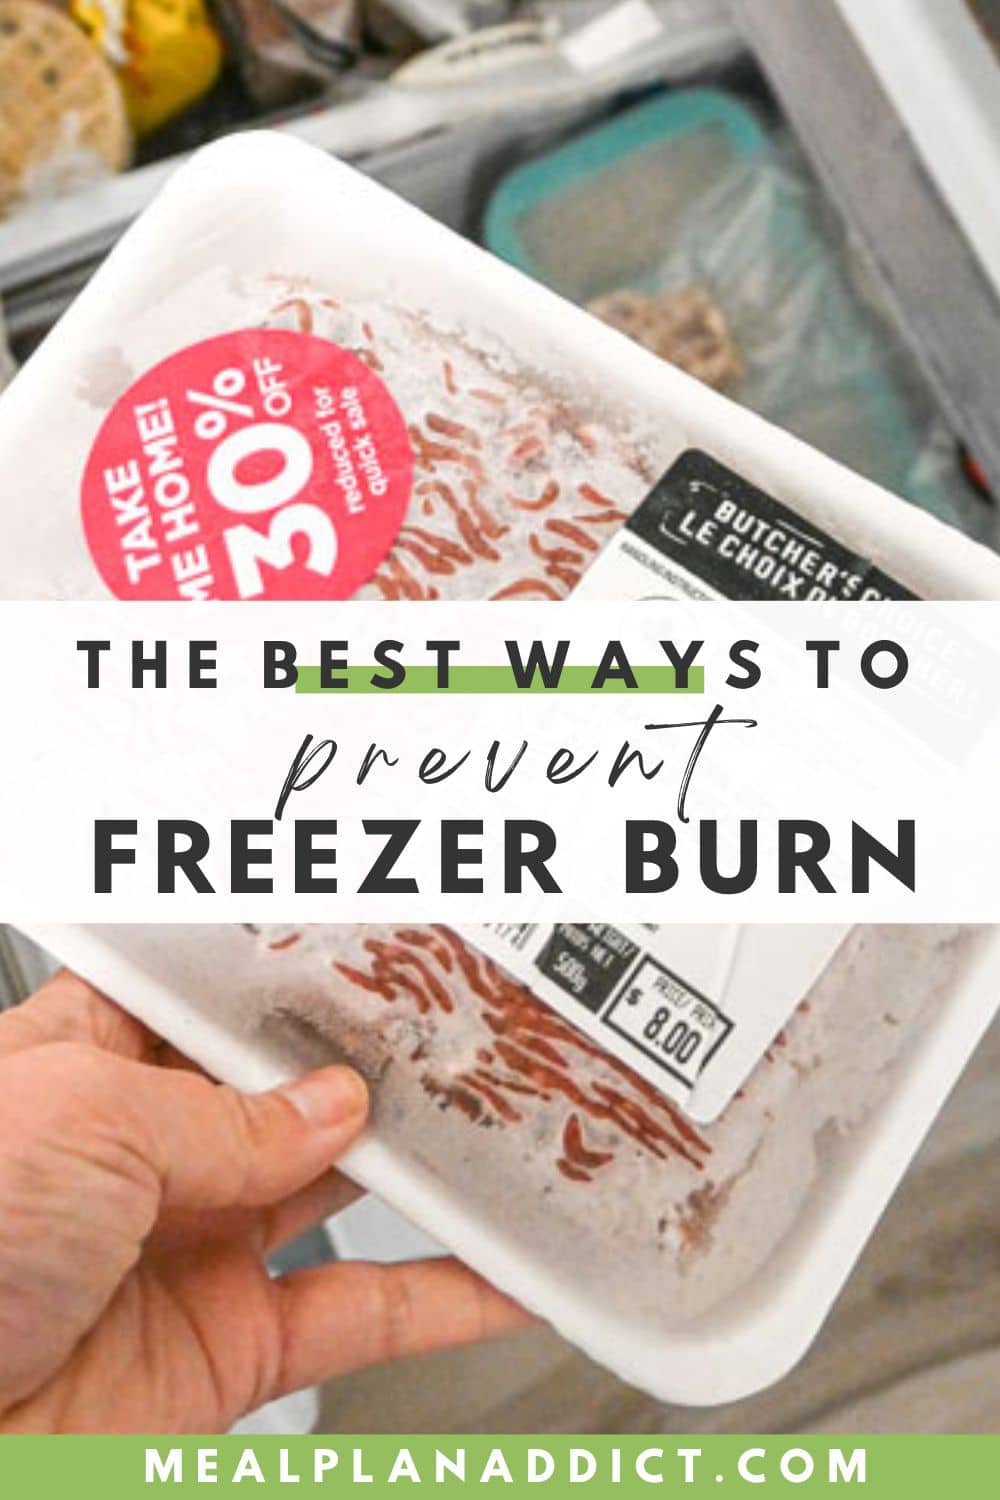 The best ways to prevent freezer burn